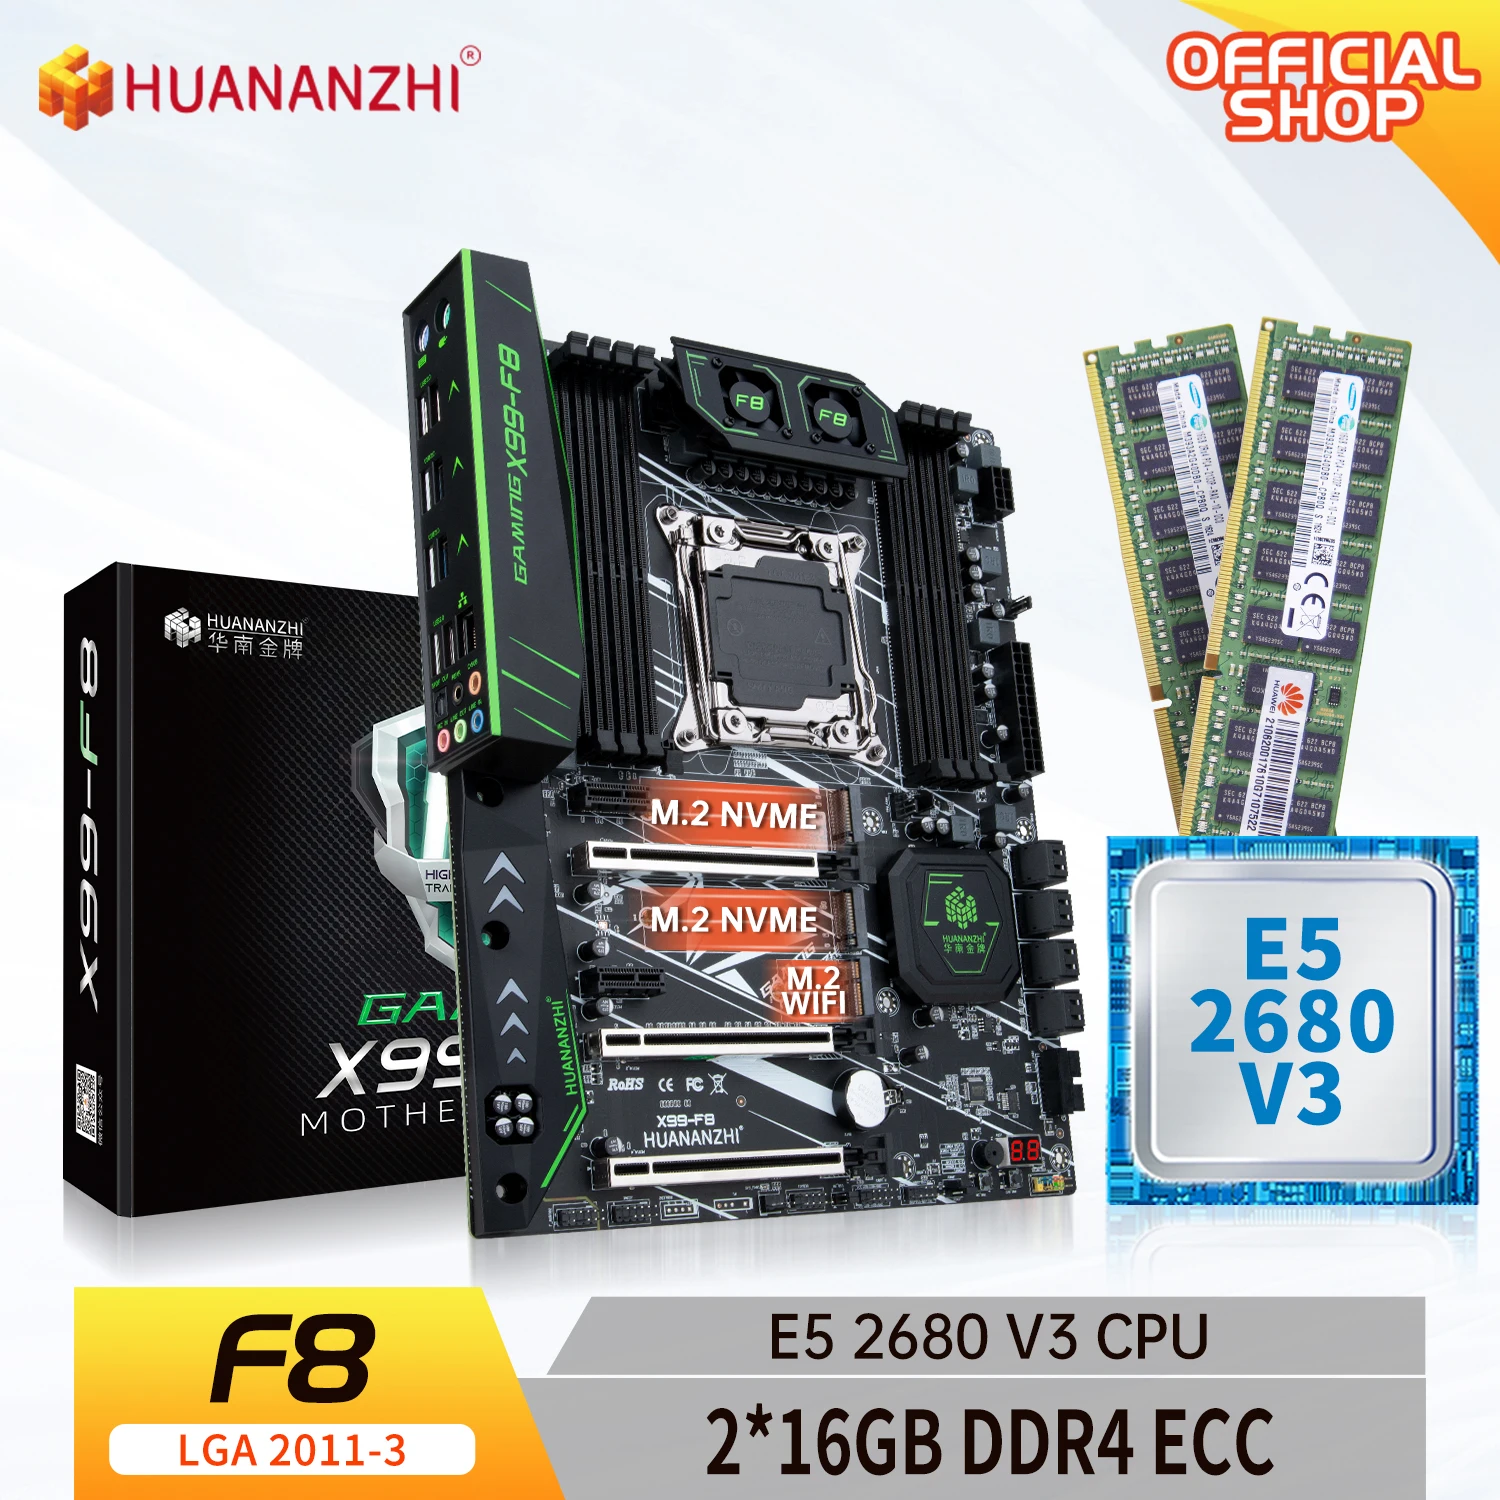 HUANANZHI X99 F8 X99 Motherboard with Intel XEON E5 2680 V3 with 2*16G DDR4 RECC memory combo kit set NVME SATA 3.0 USB 3.0 ATX